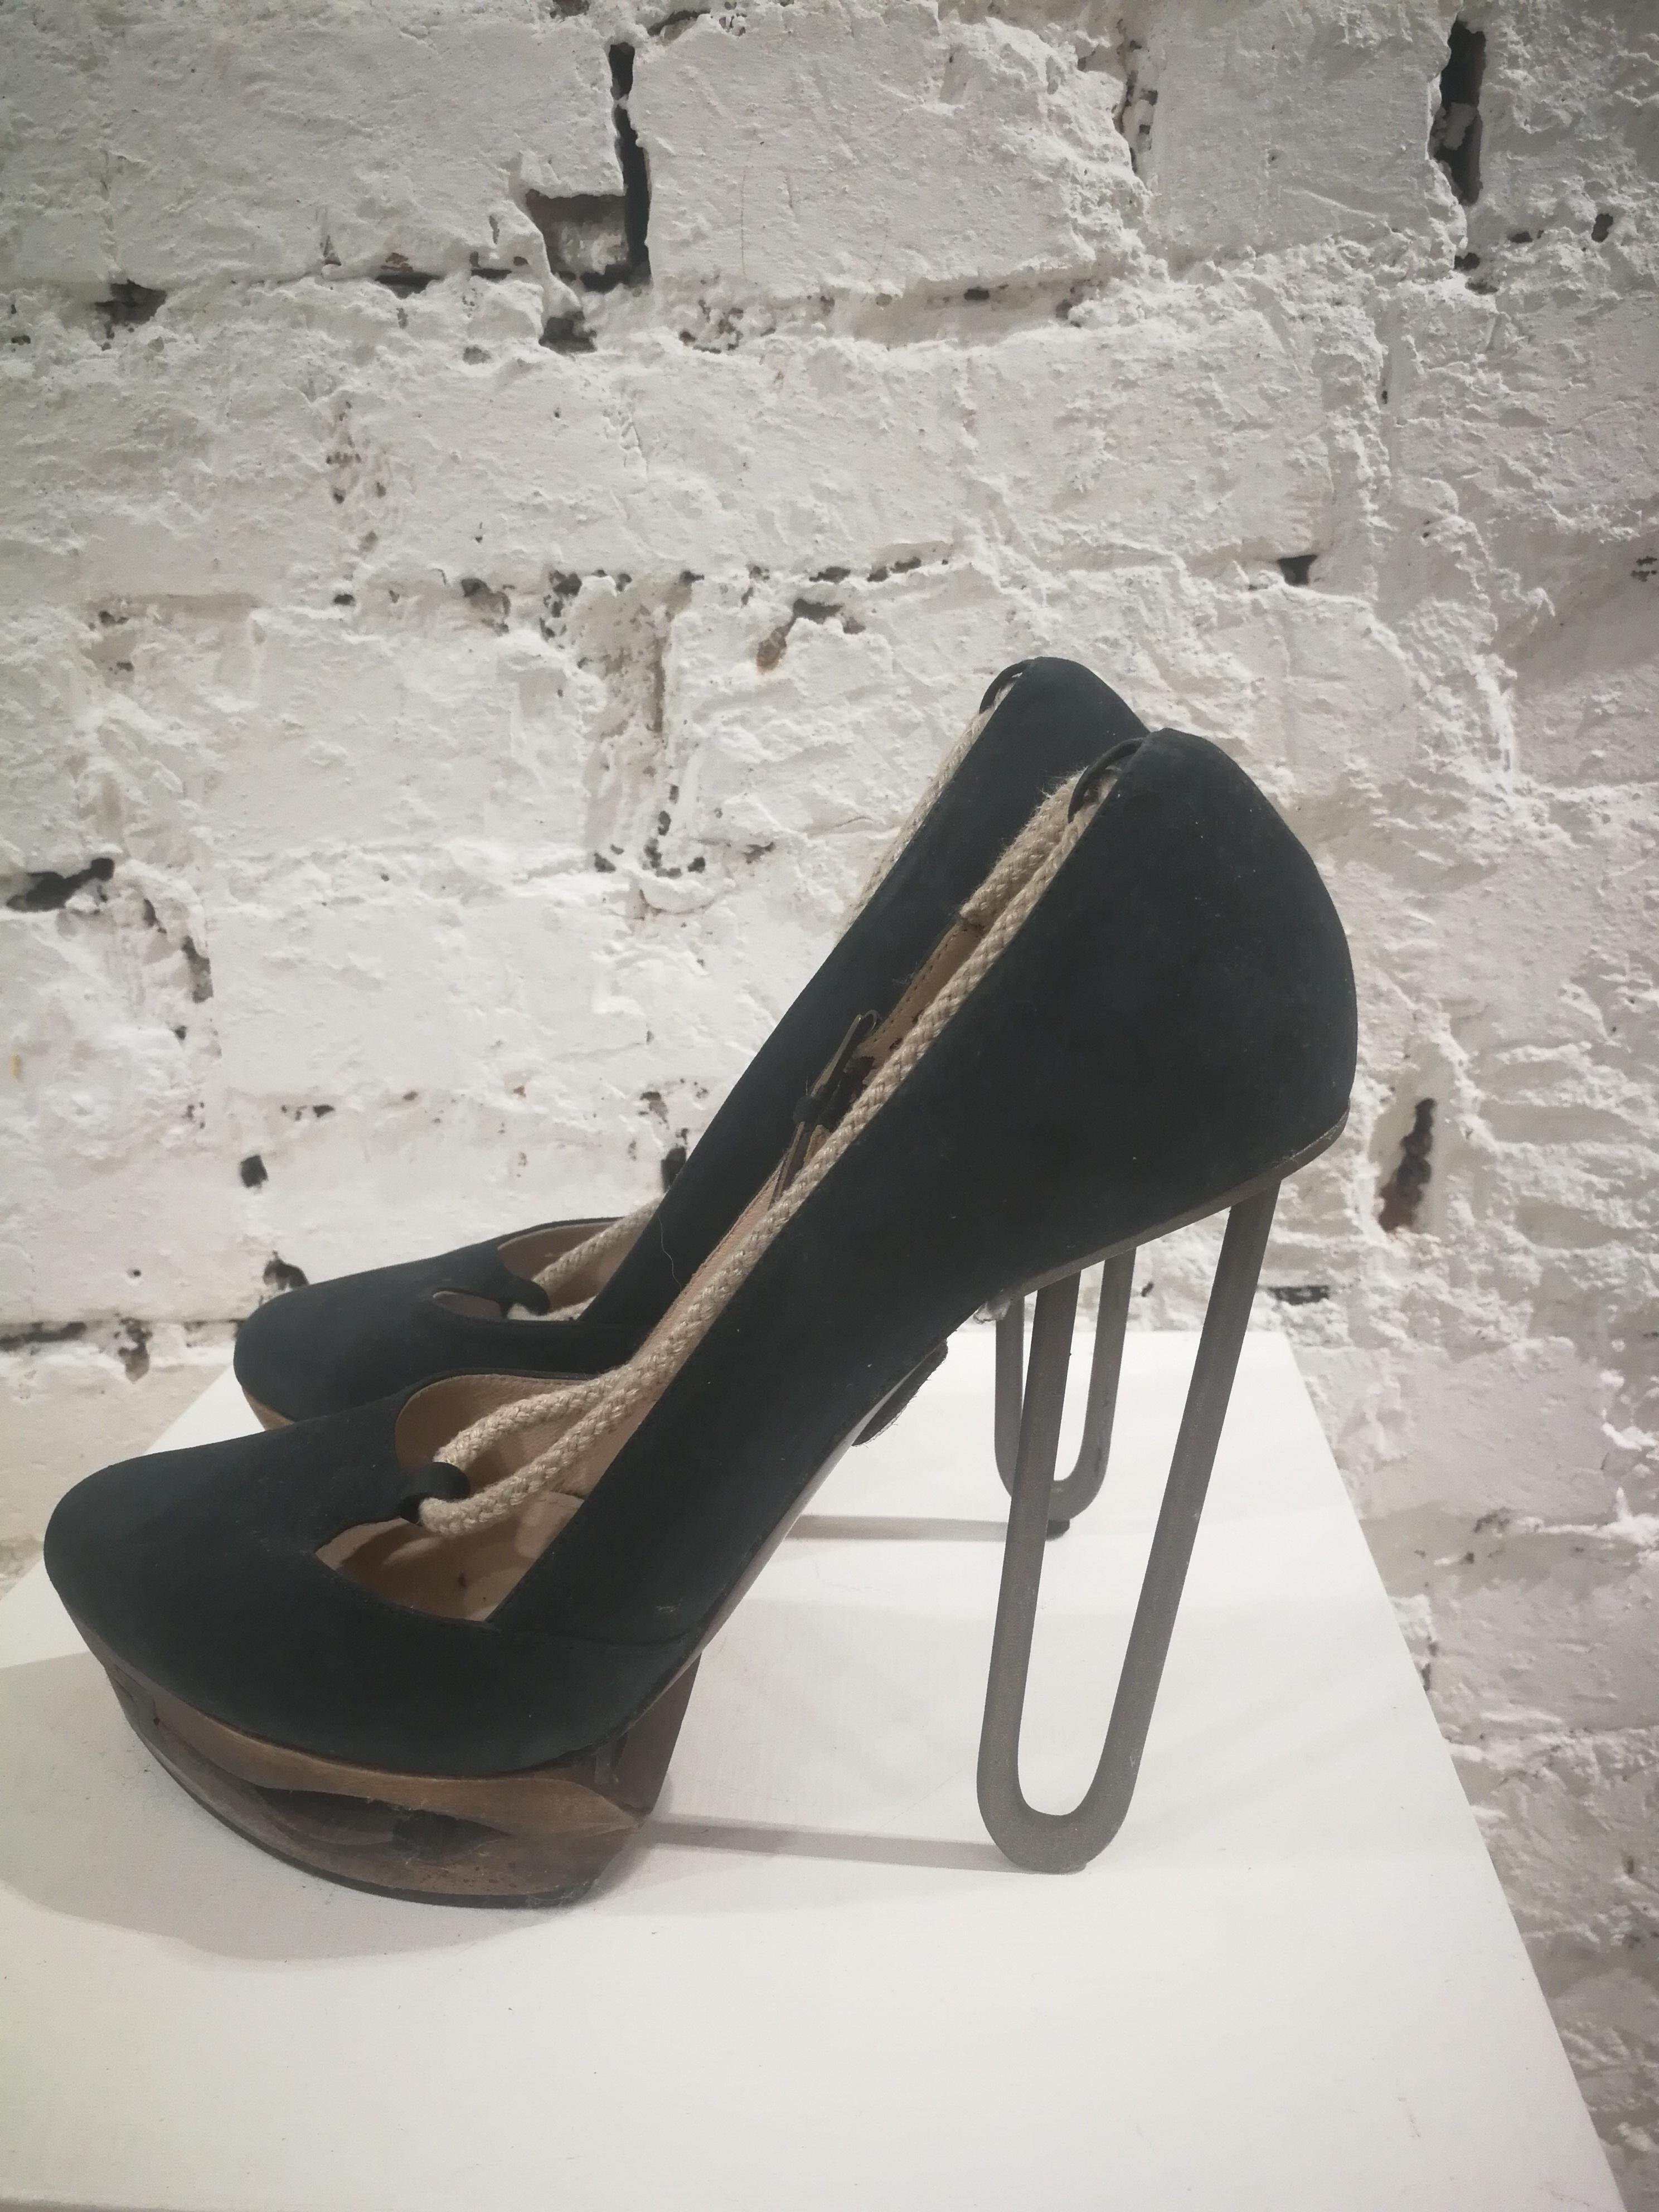 Jil Sander Suede Decollete
blue suede decollete with steel heels
size 39 it
heel: cm 13